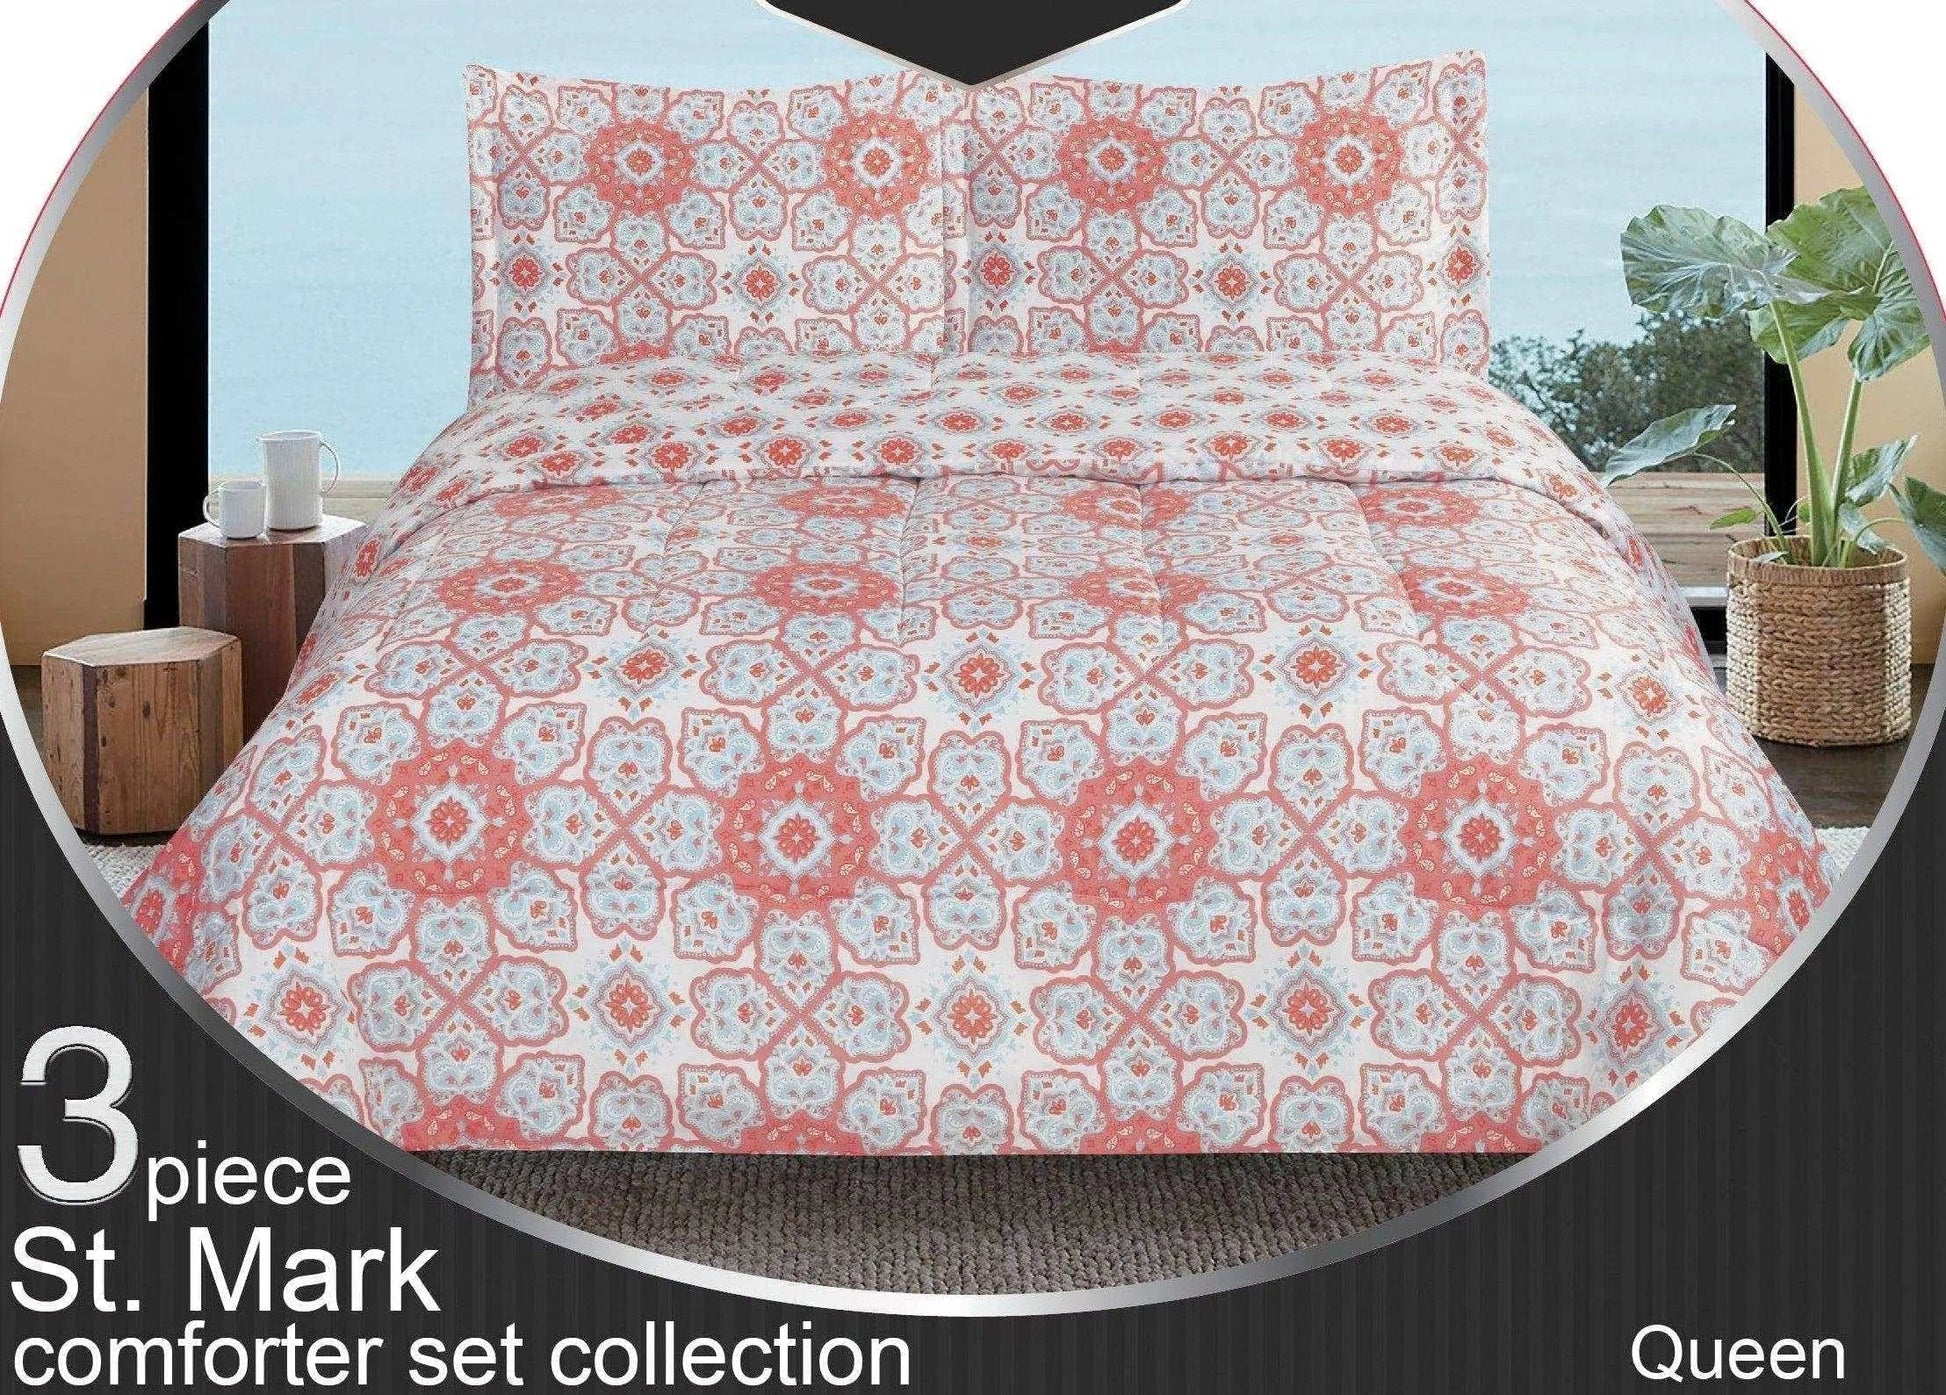 Linen World Quilts & Comforters Coral/Teal / Queen 3 PC "St. Marks" Queen/King Comforter Set